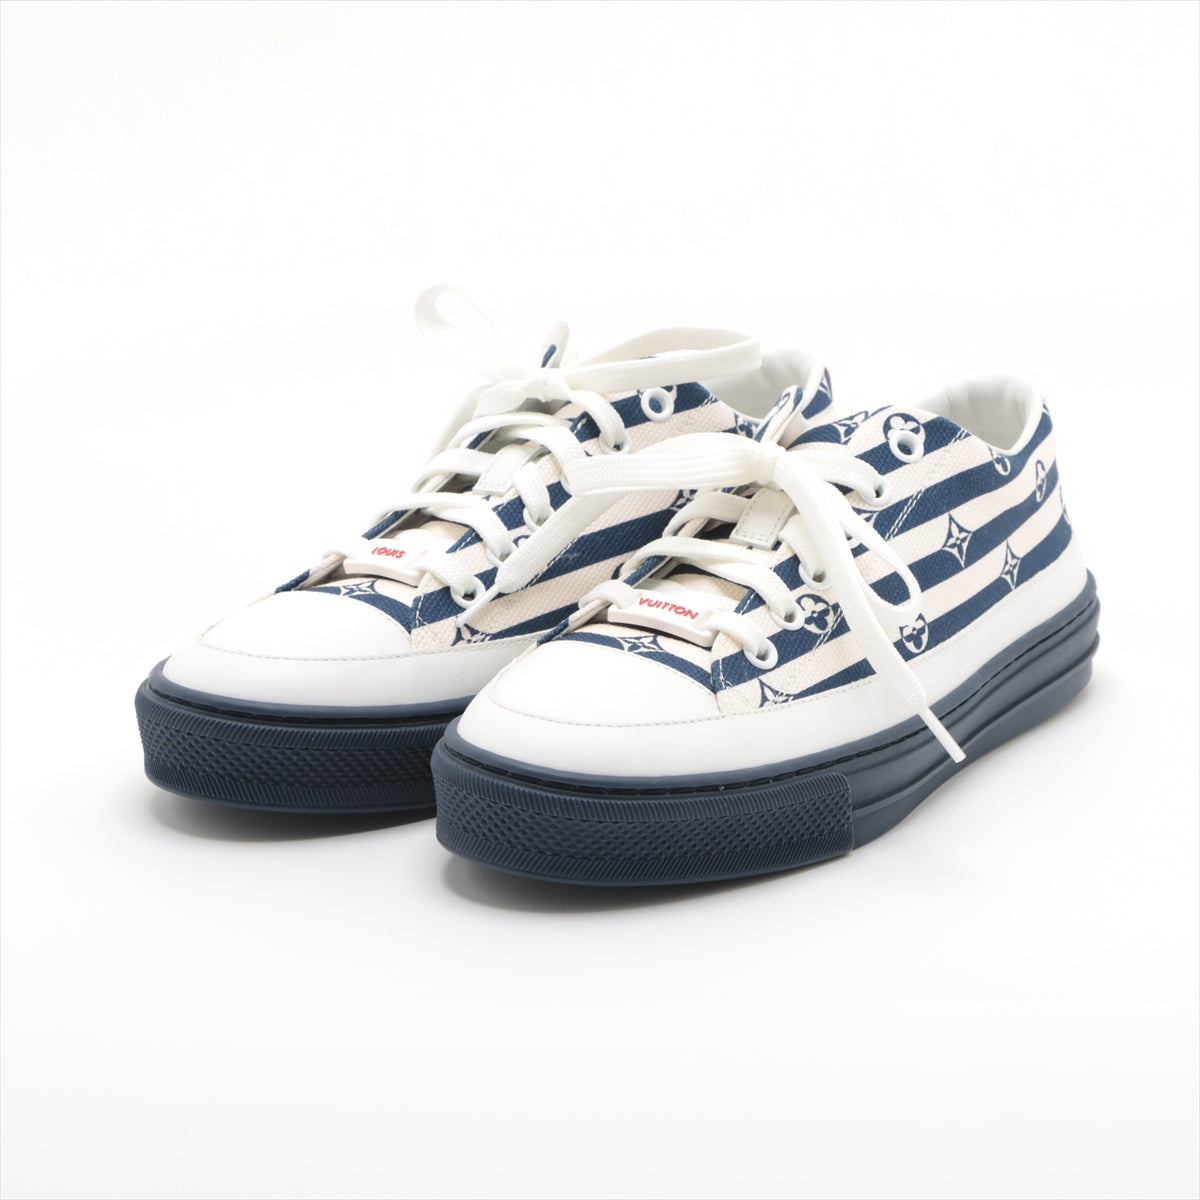 Louis Vuitton Stellar line 20 years Canvas & leather Sneakers 36 1/2 Ladies' Blue x white VL0210 Monogram